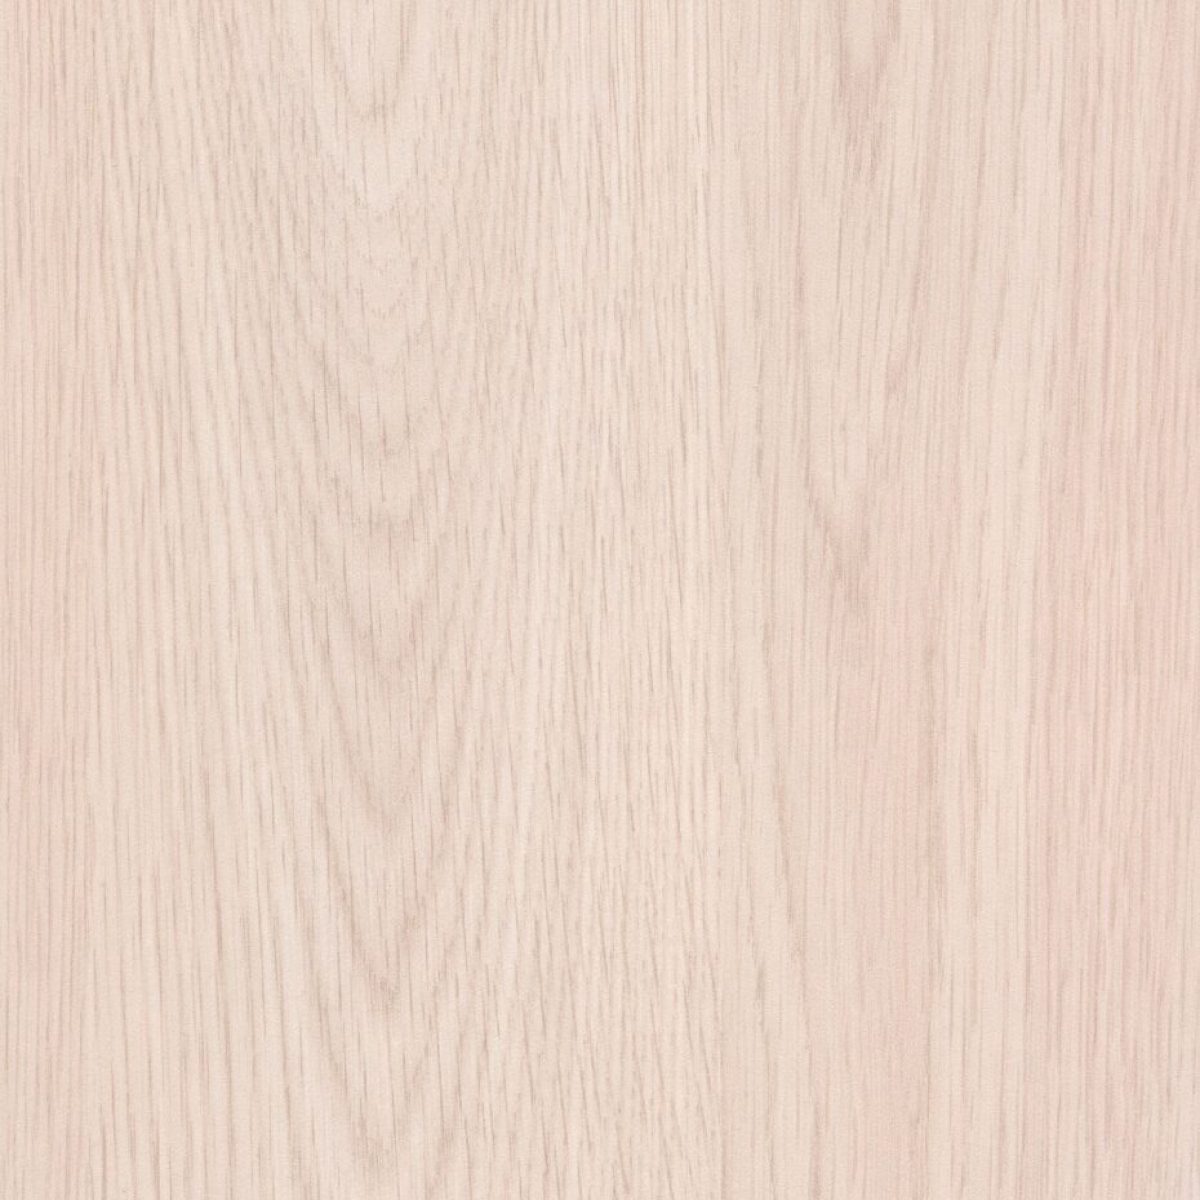 WHITE OAK - Tamaños (1,22 x 2,44m)  |  Espesor (0.7mm)